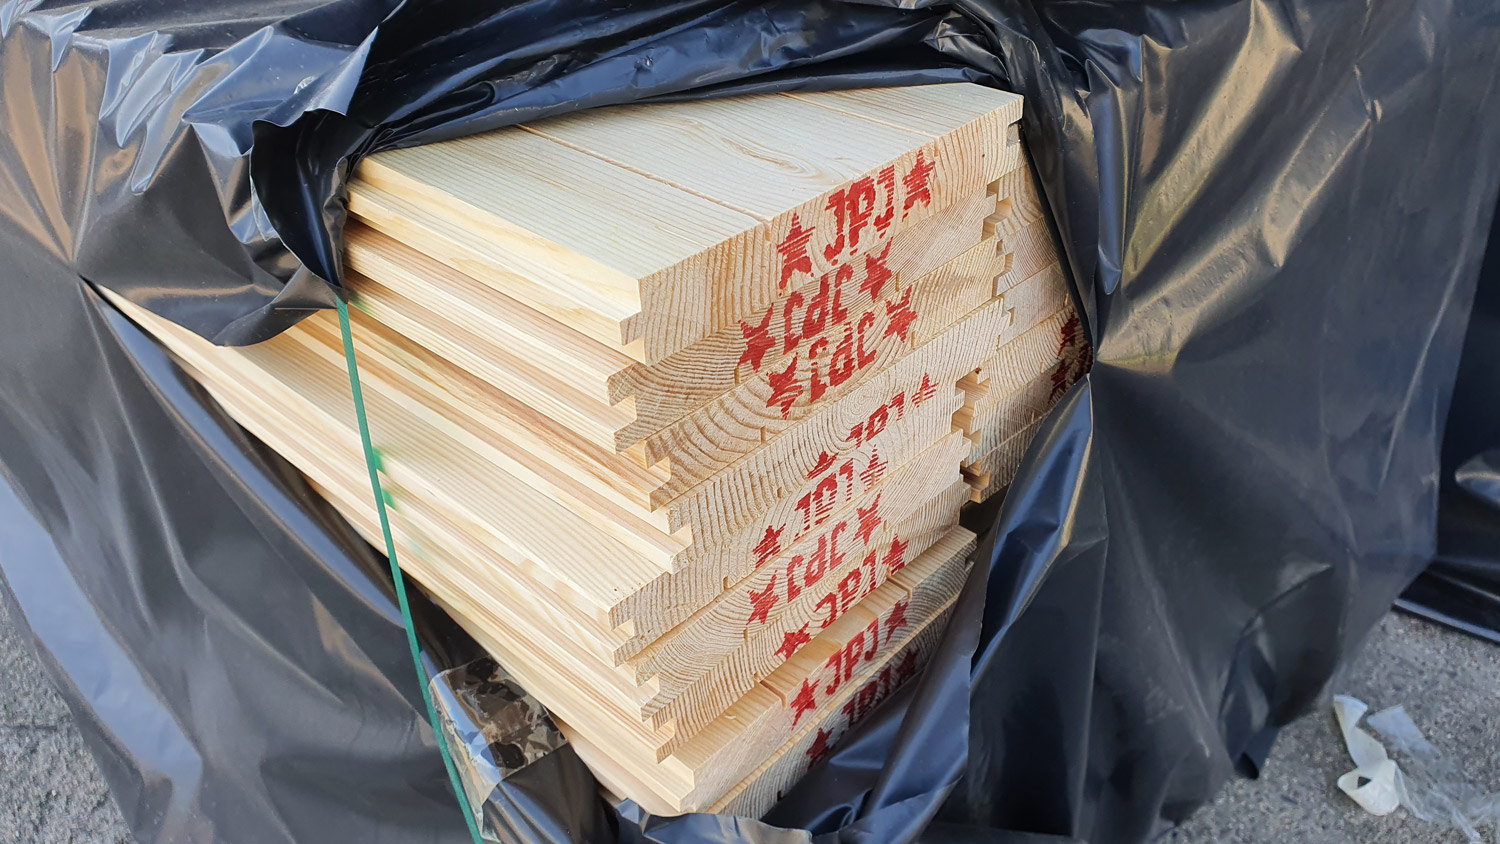 Massivholzdiele Kiefer rustikal+, 27x193mm, Länge 4,80m, gehobelt, 2-seitig Nut + Feder